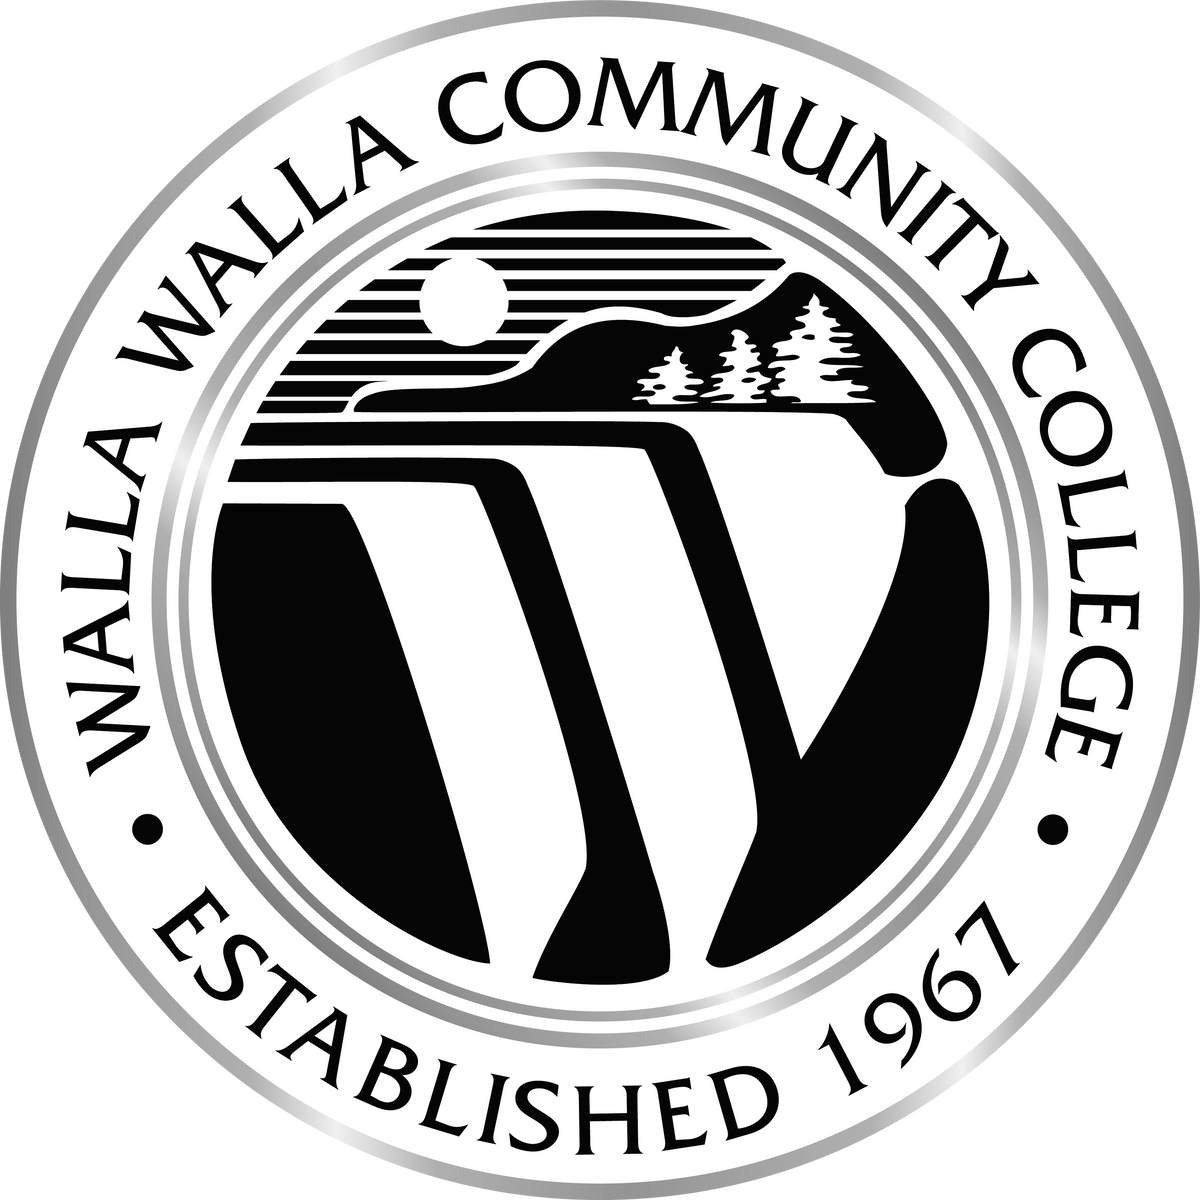 Walla Walla logo